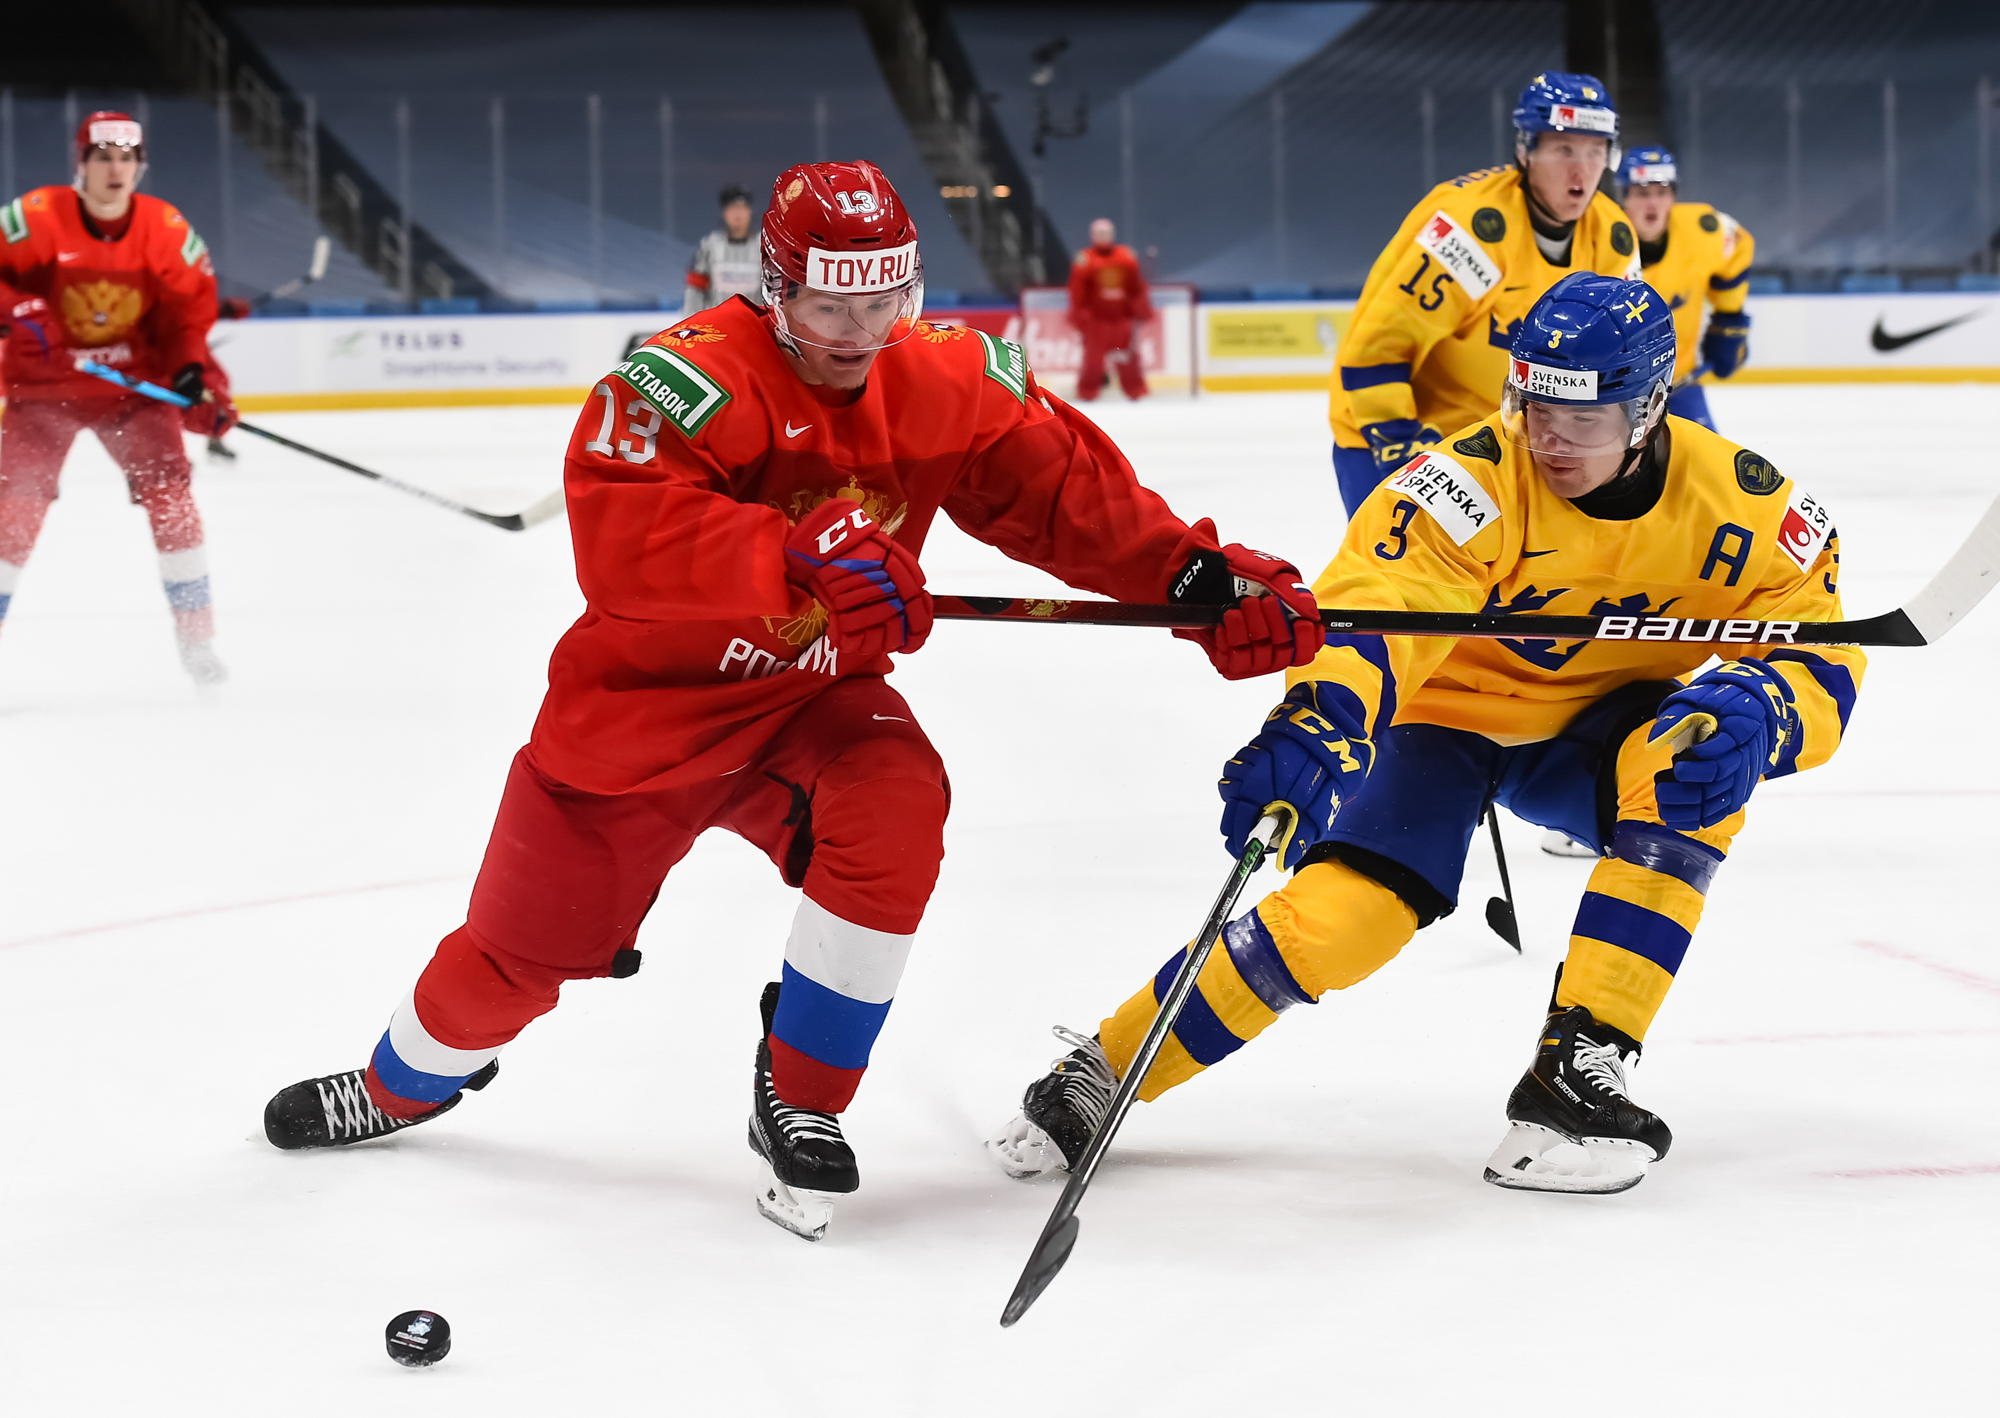 Iihf 2021 : IIHF - Gallery: Finland vs Switzerland - 2021 IIHF World ... - The page (iihf.com/en/events/2021/wm), dedicated to the world championship runs in english, russian and latvian.